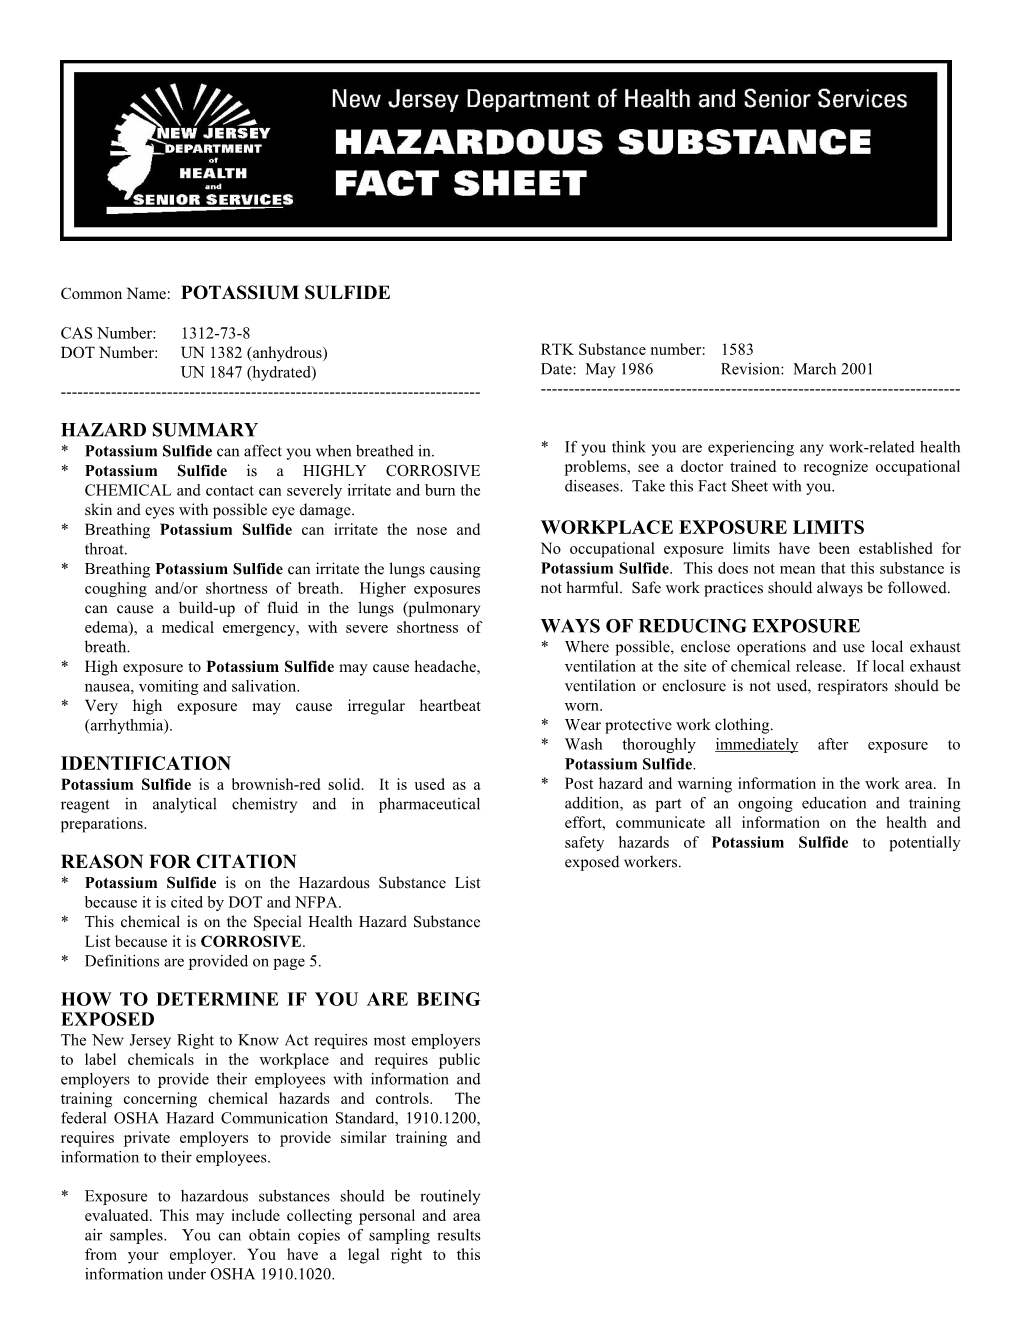 Potassium Sulfide Hazard Summary Identification